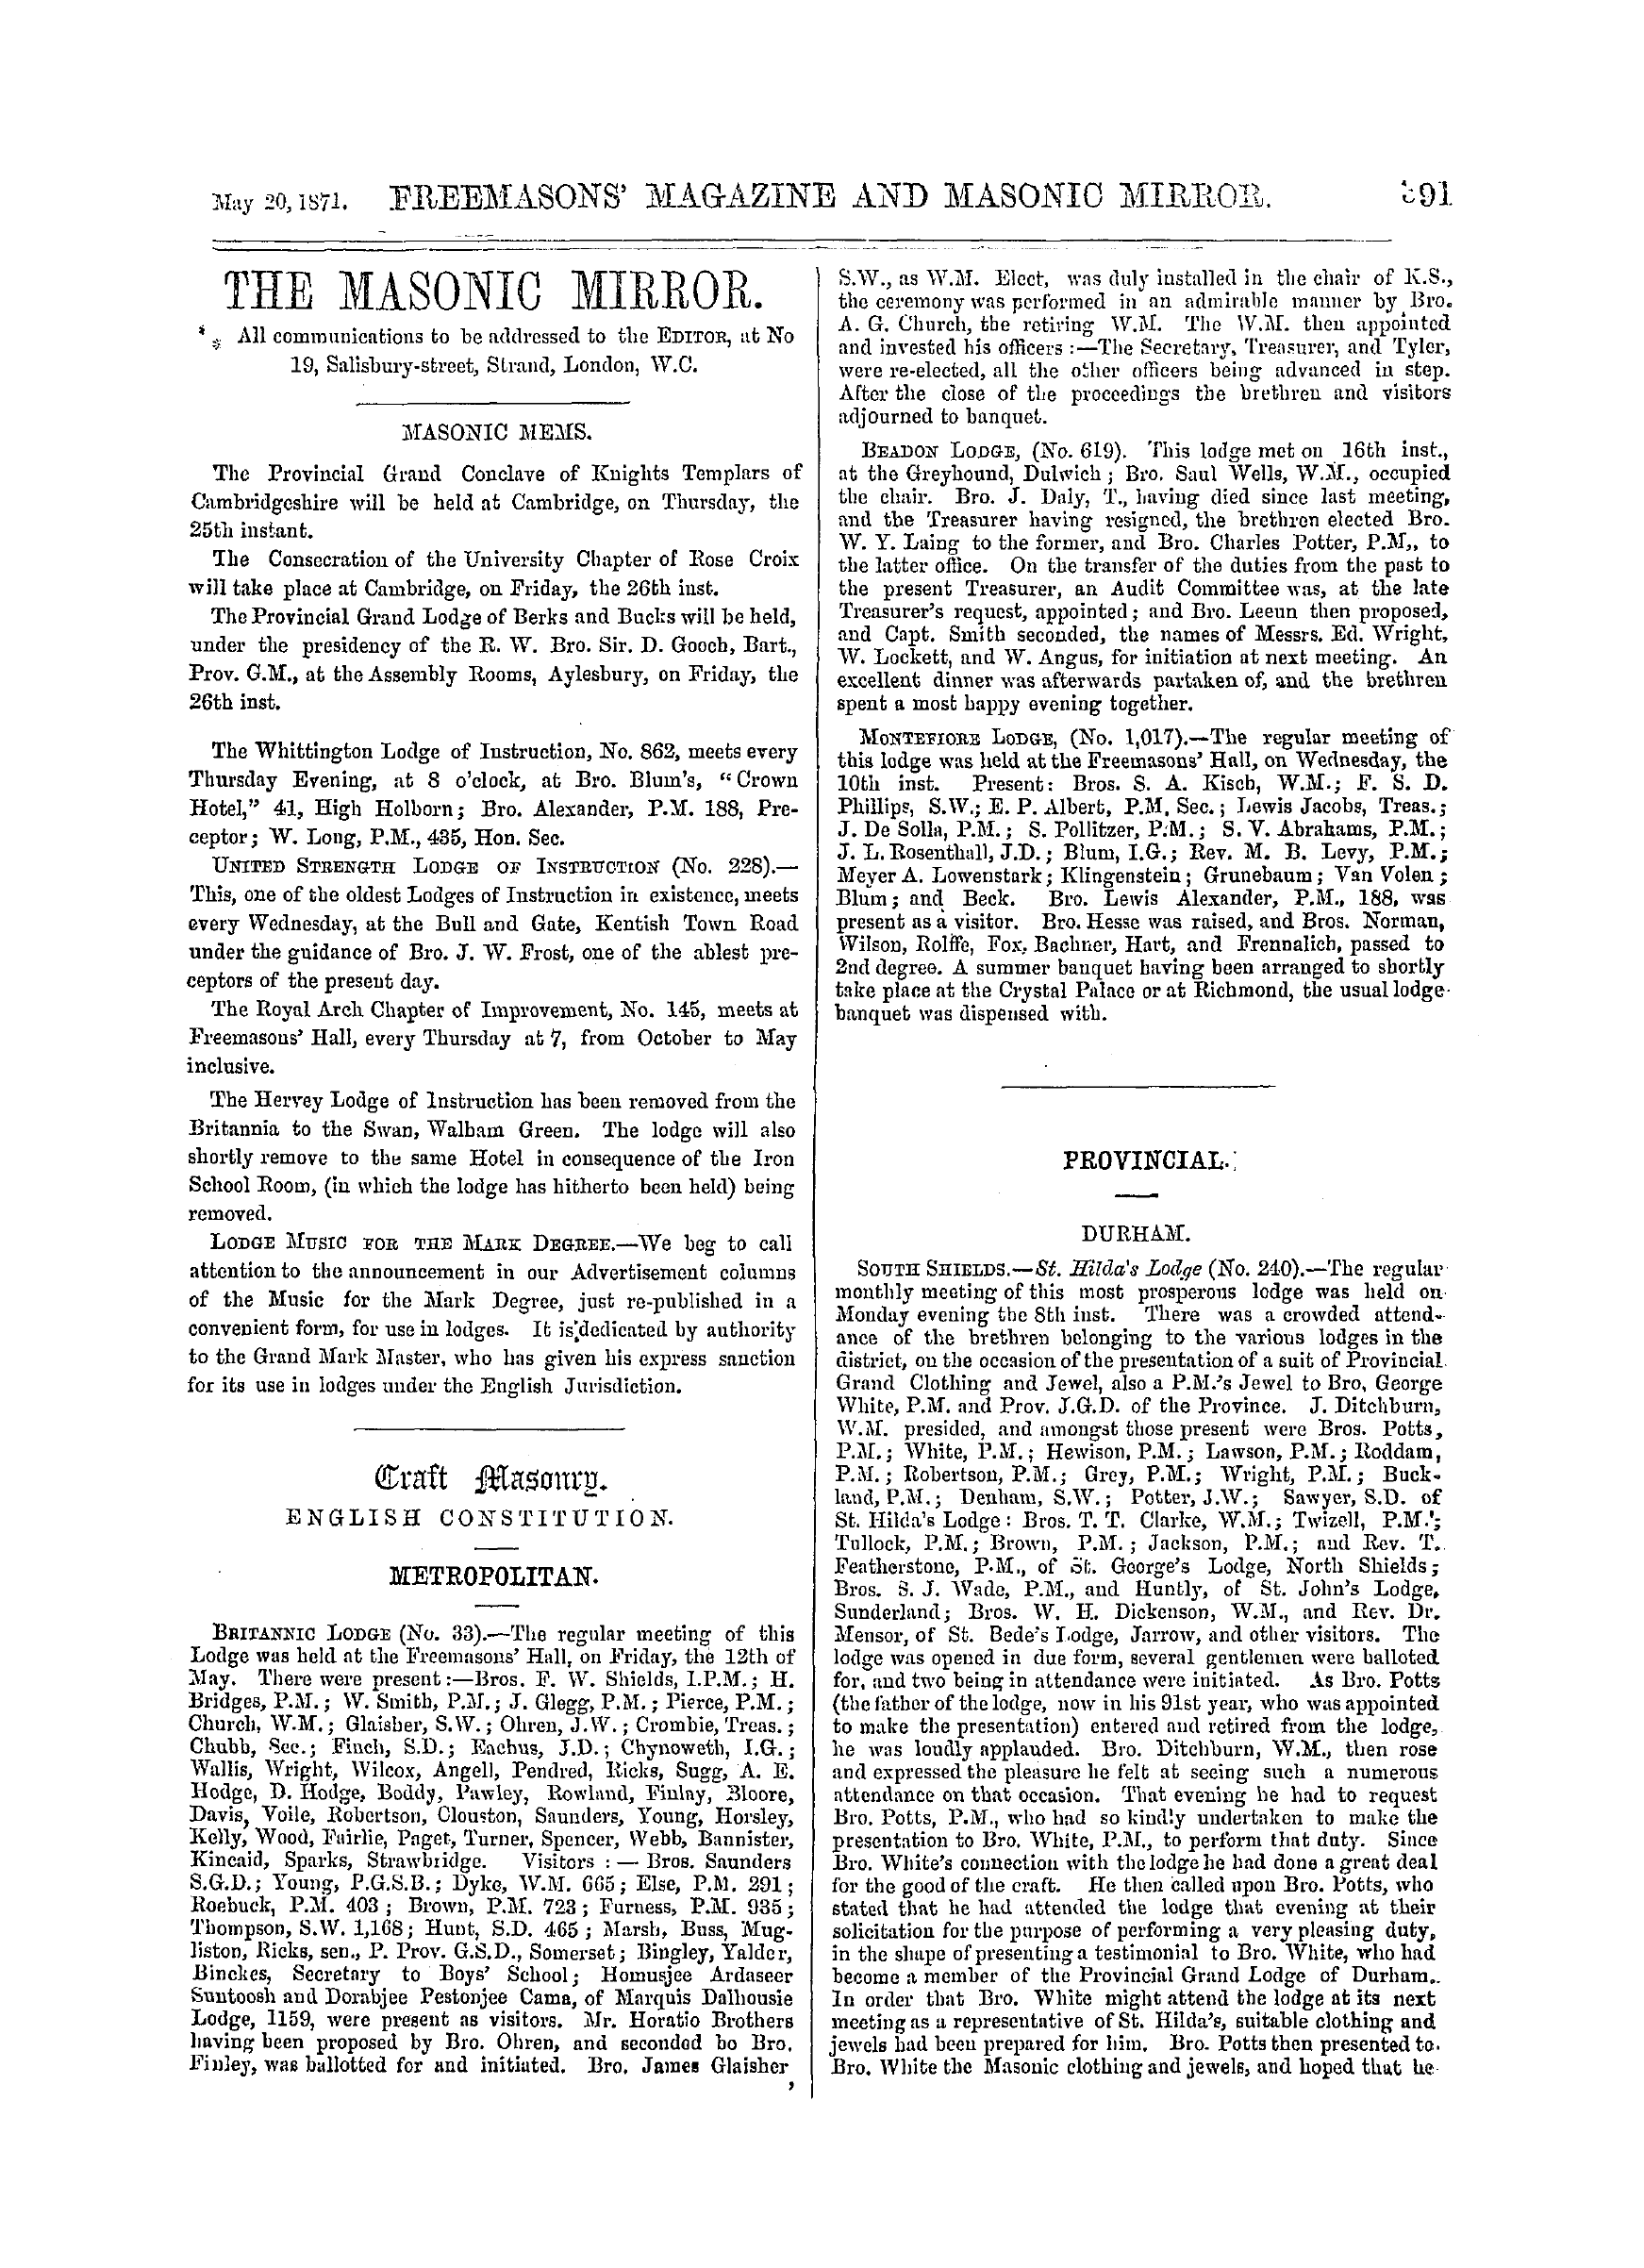 The Freemasons' Monthly Magazine: 1871-05-20 - Provincial.